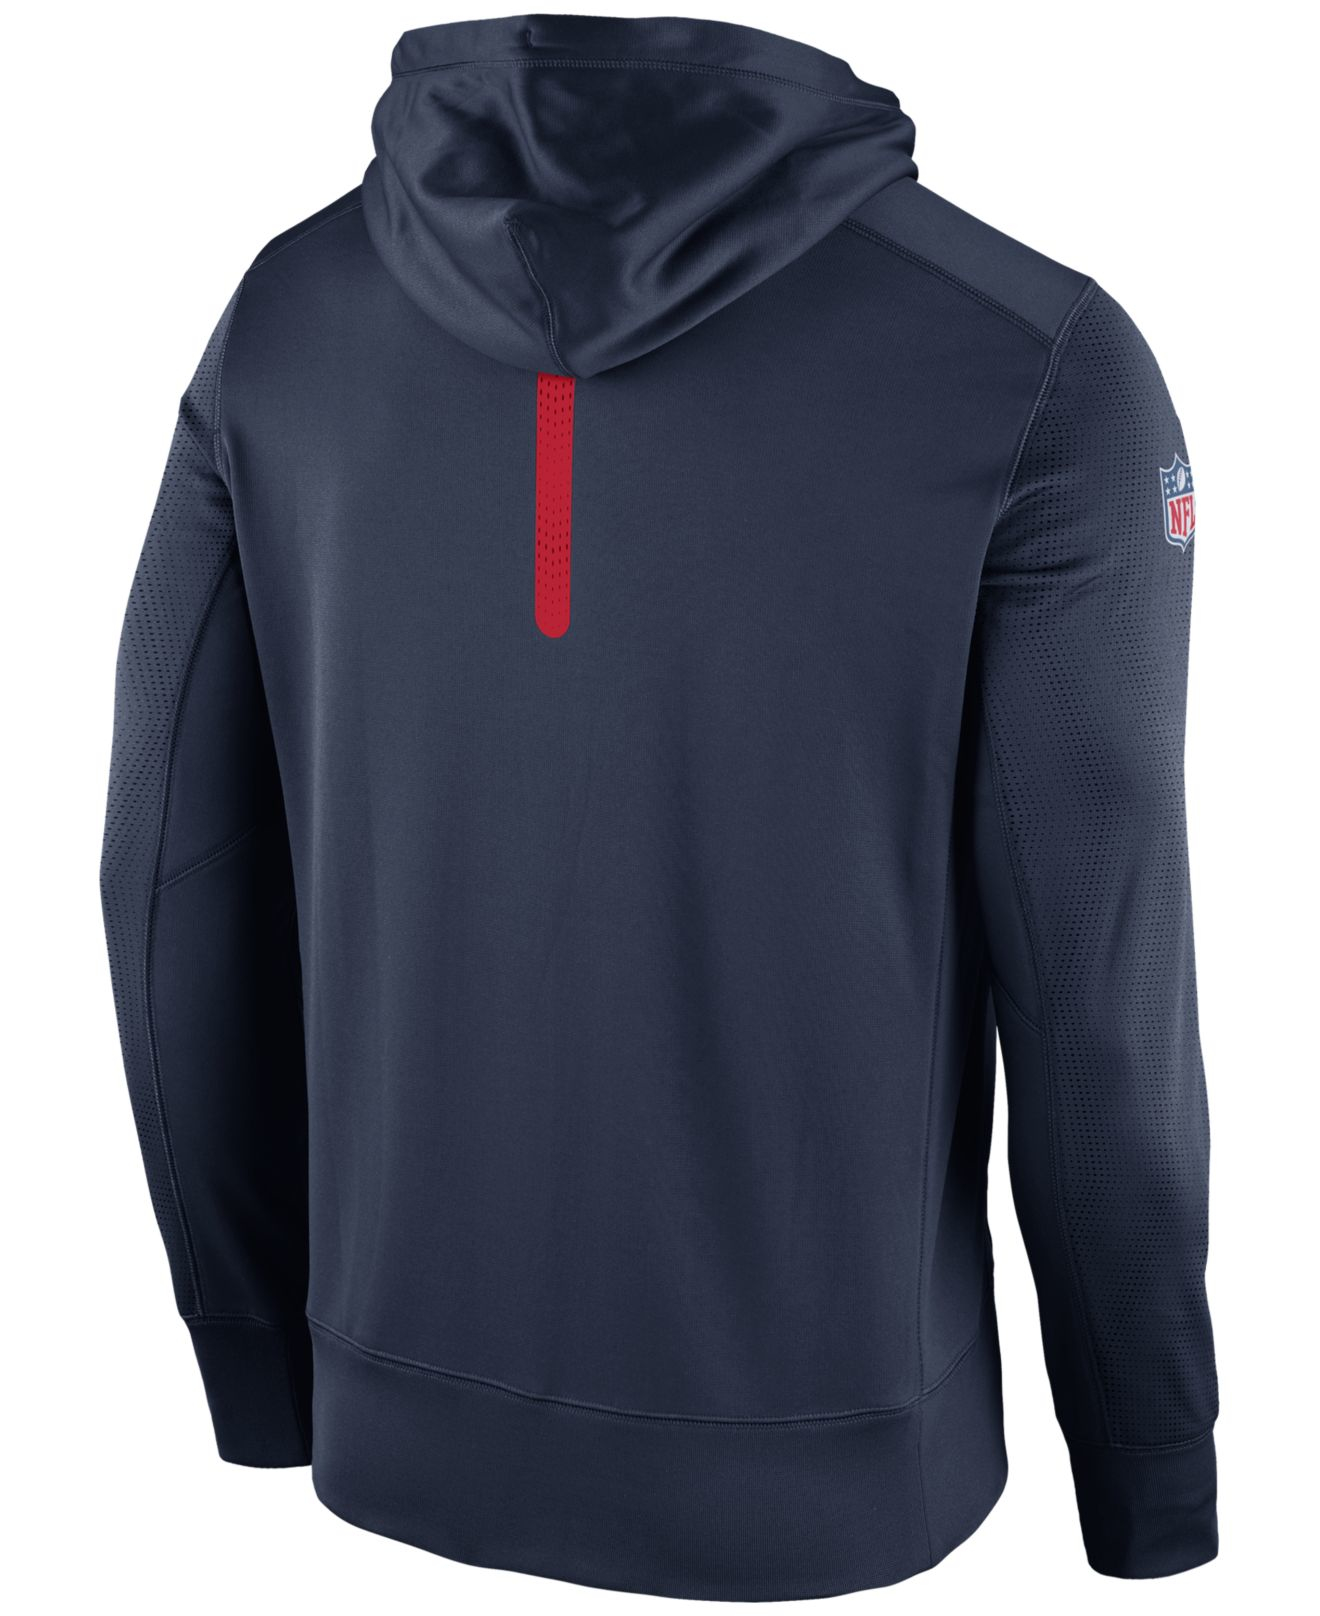 Lyst - Nike Men's New England Patriots Sideline Ko Fleece Full-zip ...